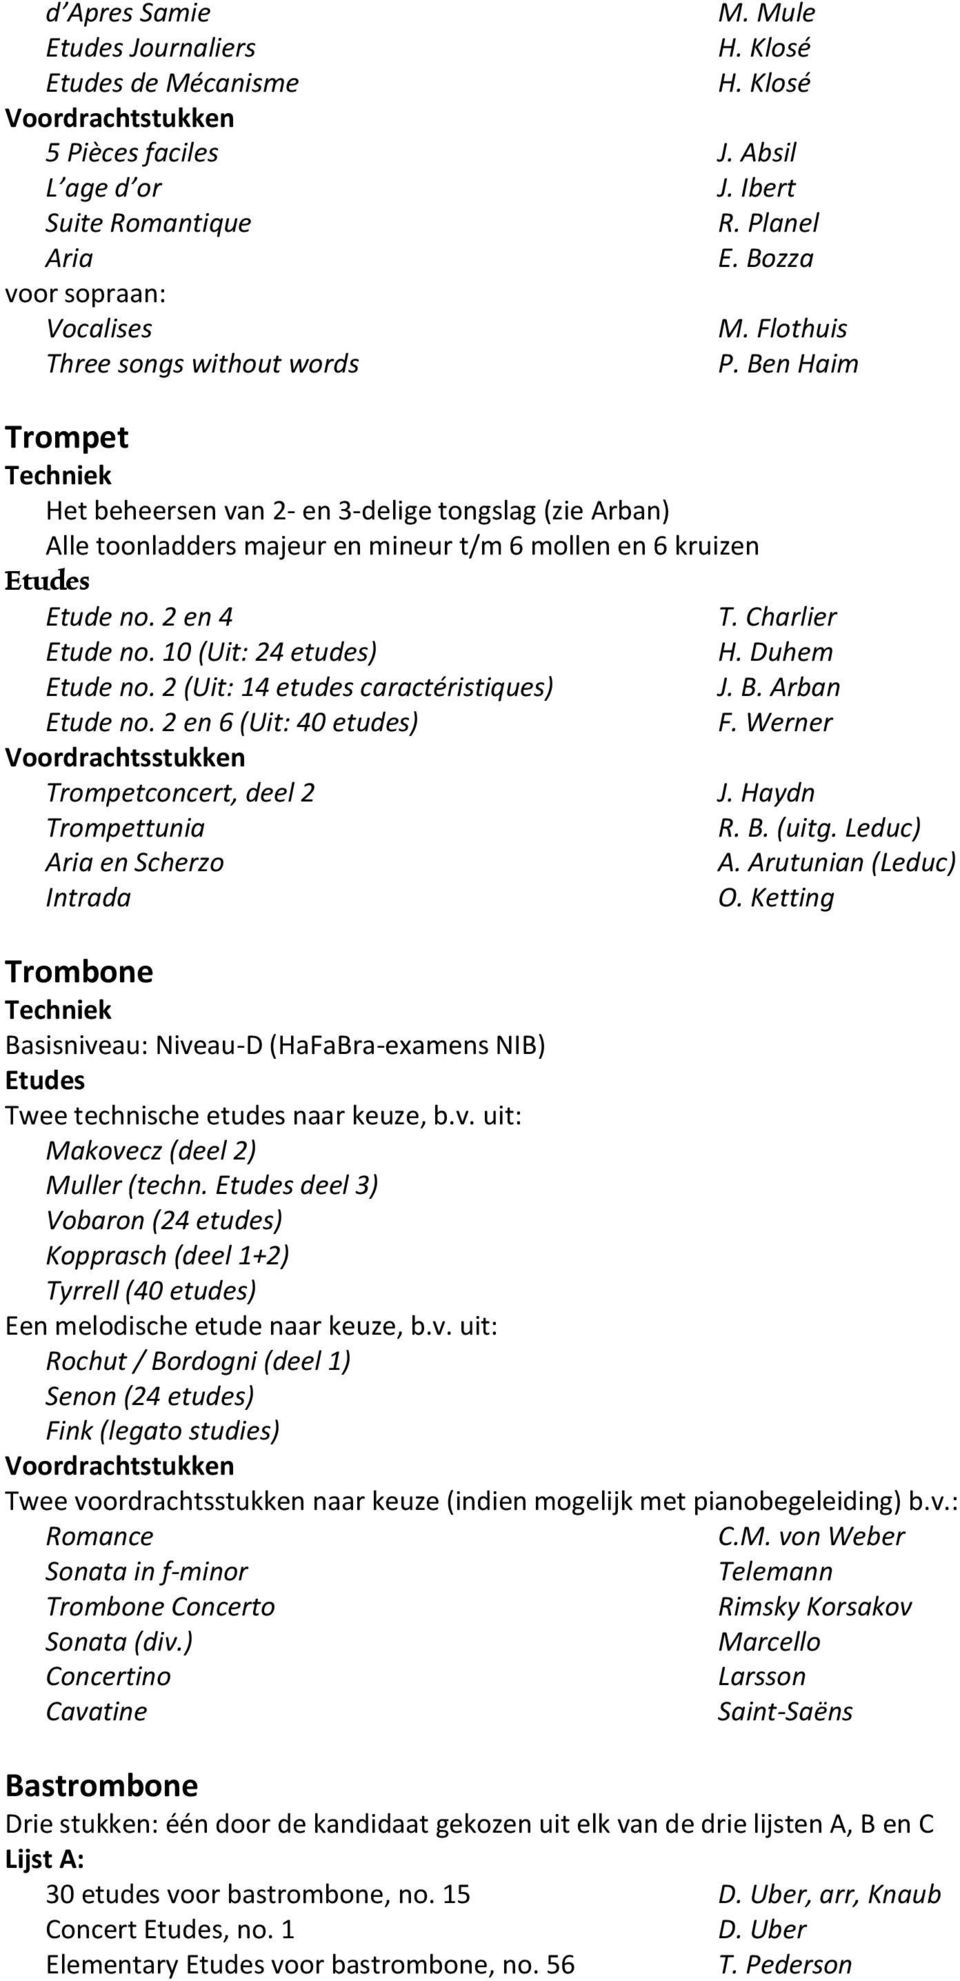 Charlier Etude no. 10 (Uit: 24 etudes) H. Duhem Etude no. 2 (Uit: 14 etudes caractéristiques) J. B. Arban Etude no. 2 en 6 (Uit: 40 etudes) F. Werner Voordrachtsstukken Trompetconcert, deel 2 J.